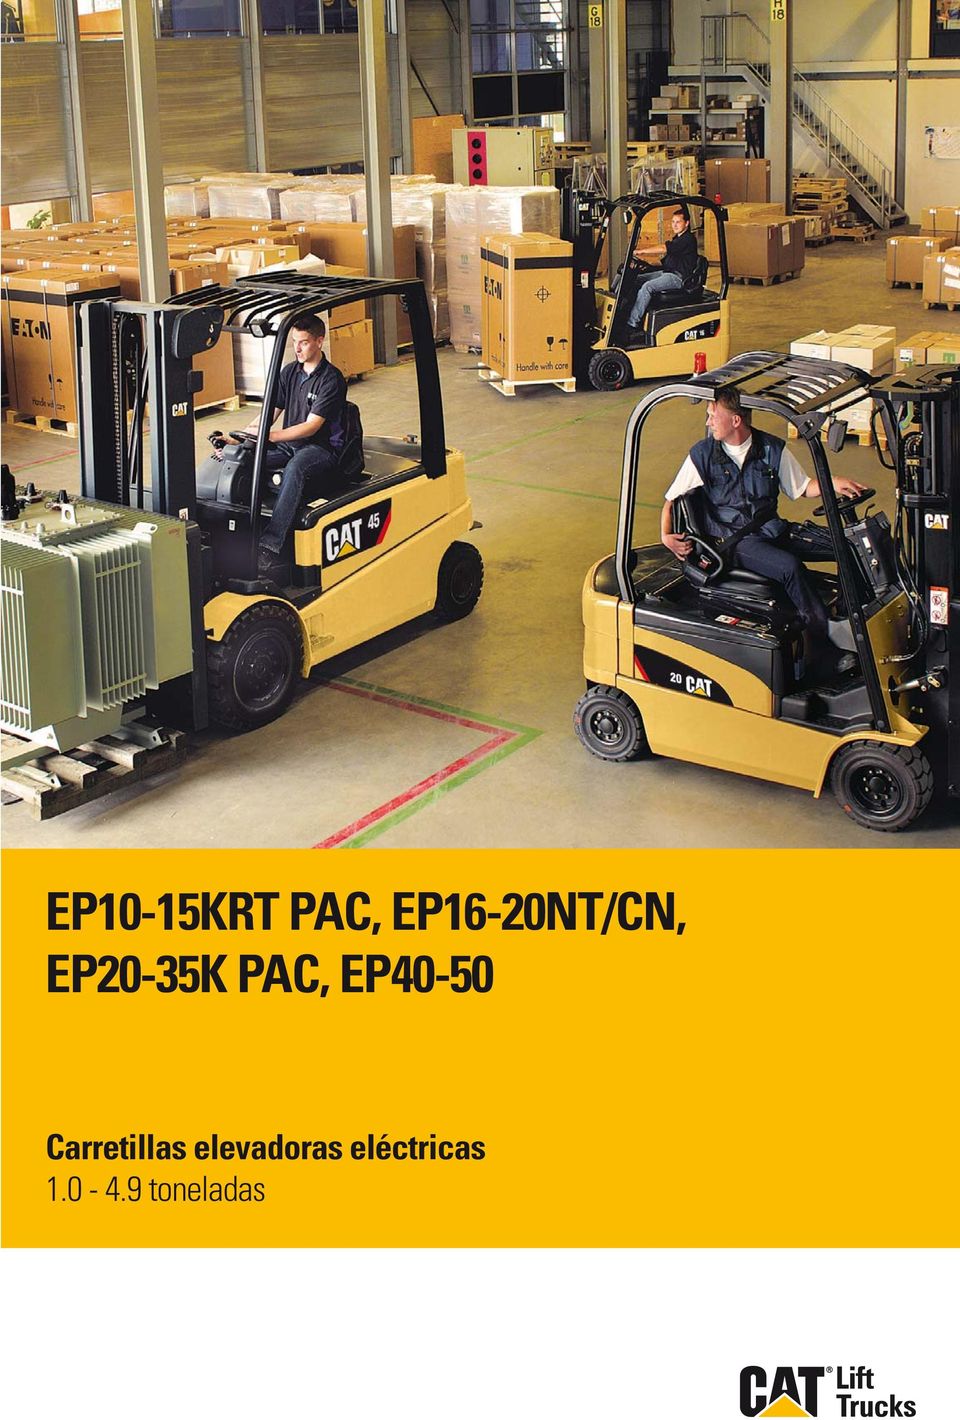 PAC, EP40-50 Carretillas